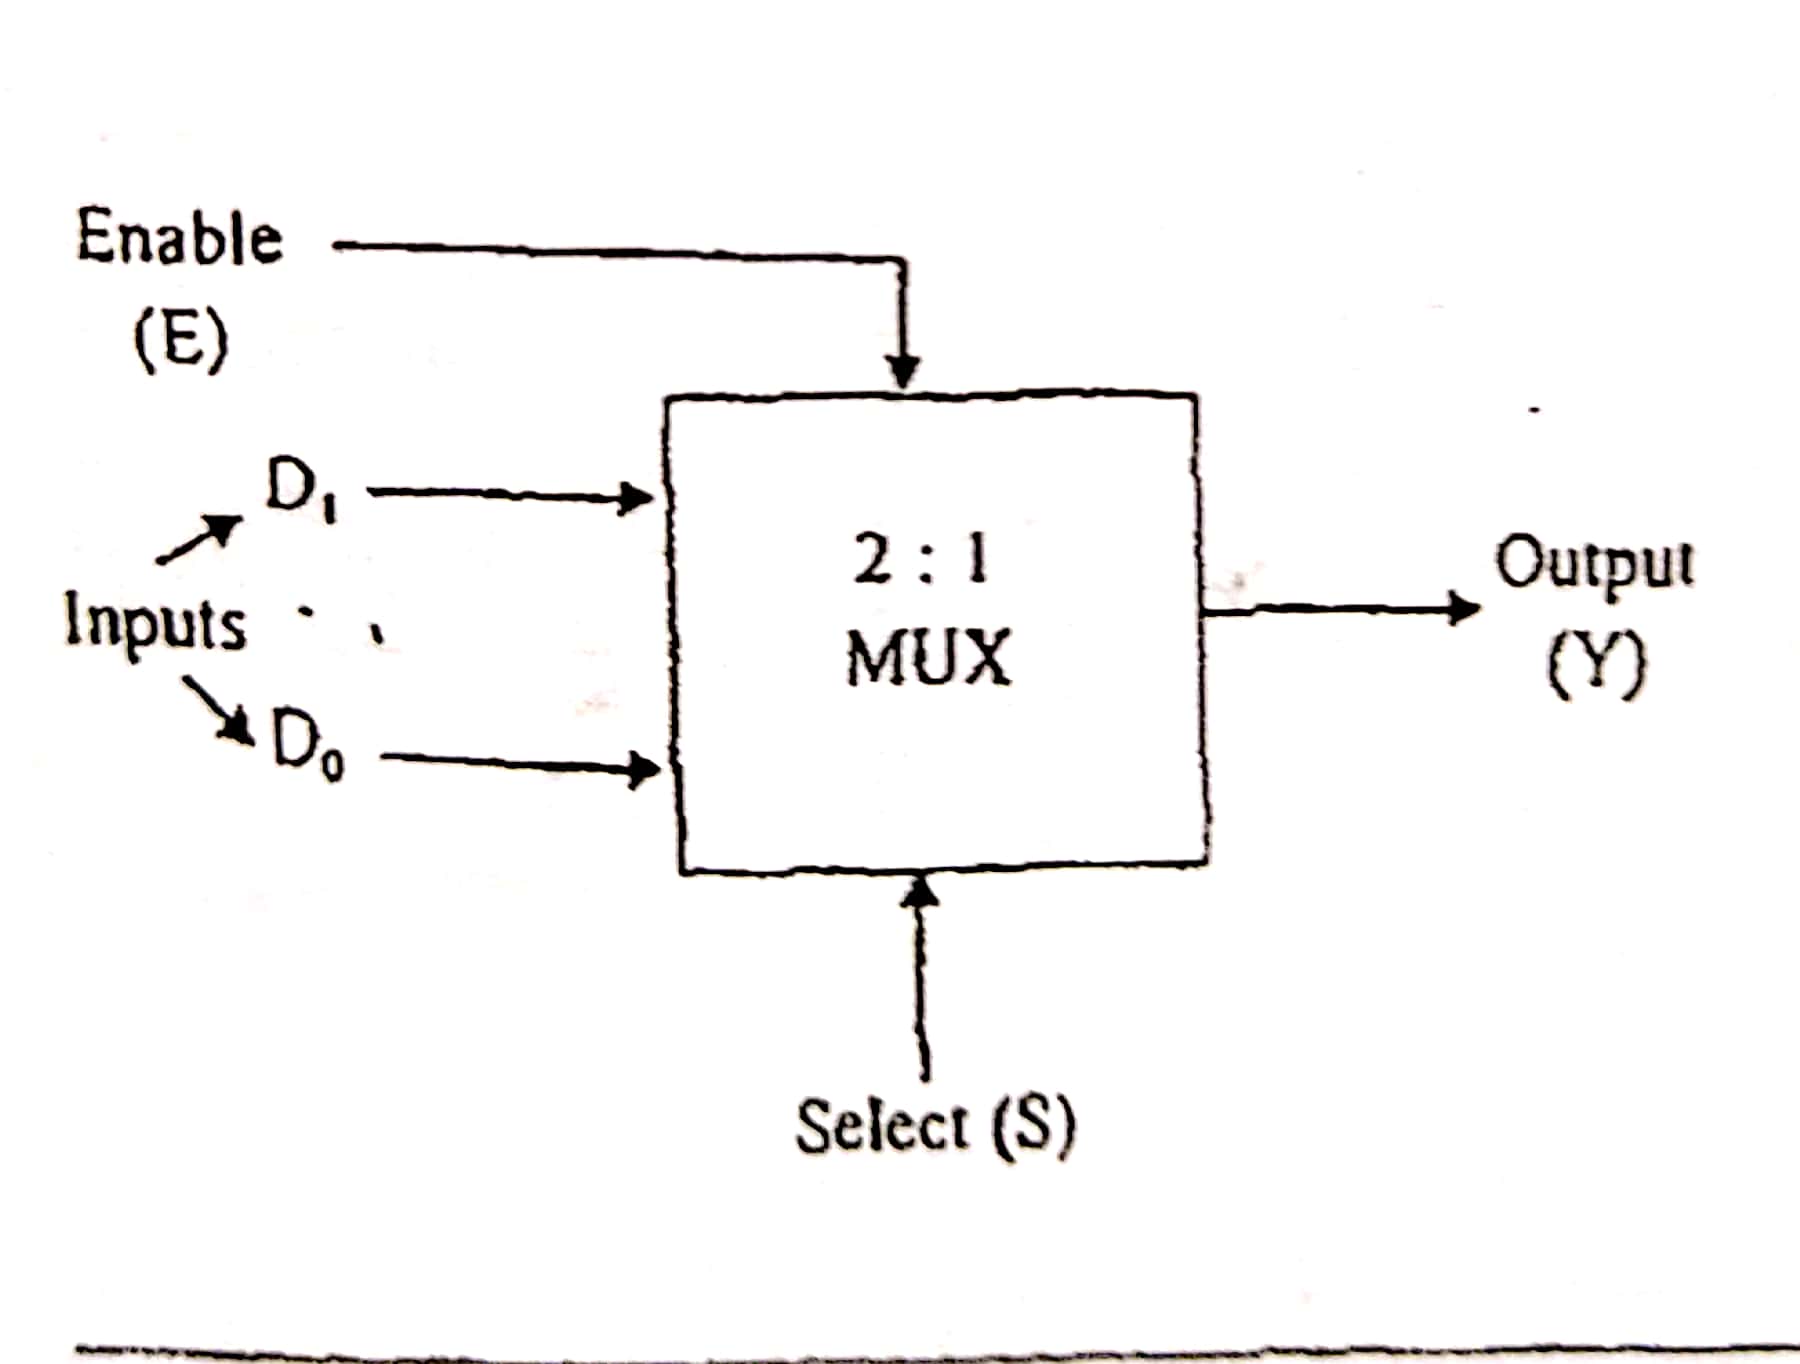 2:1 Multiplexer in Digital Electronics